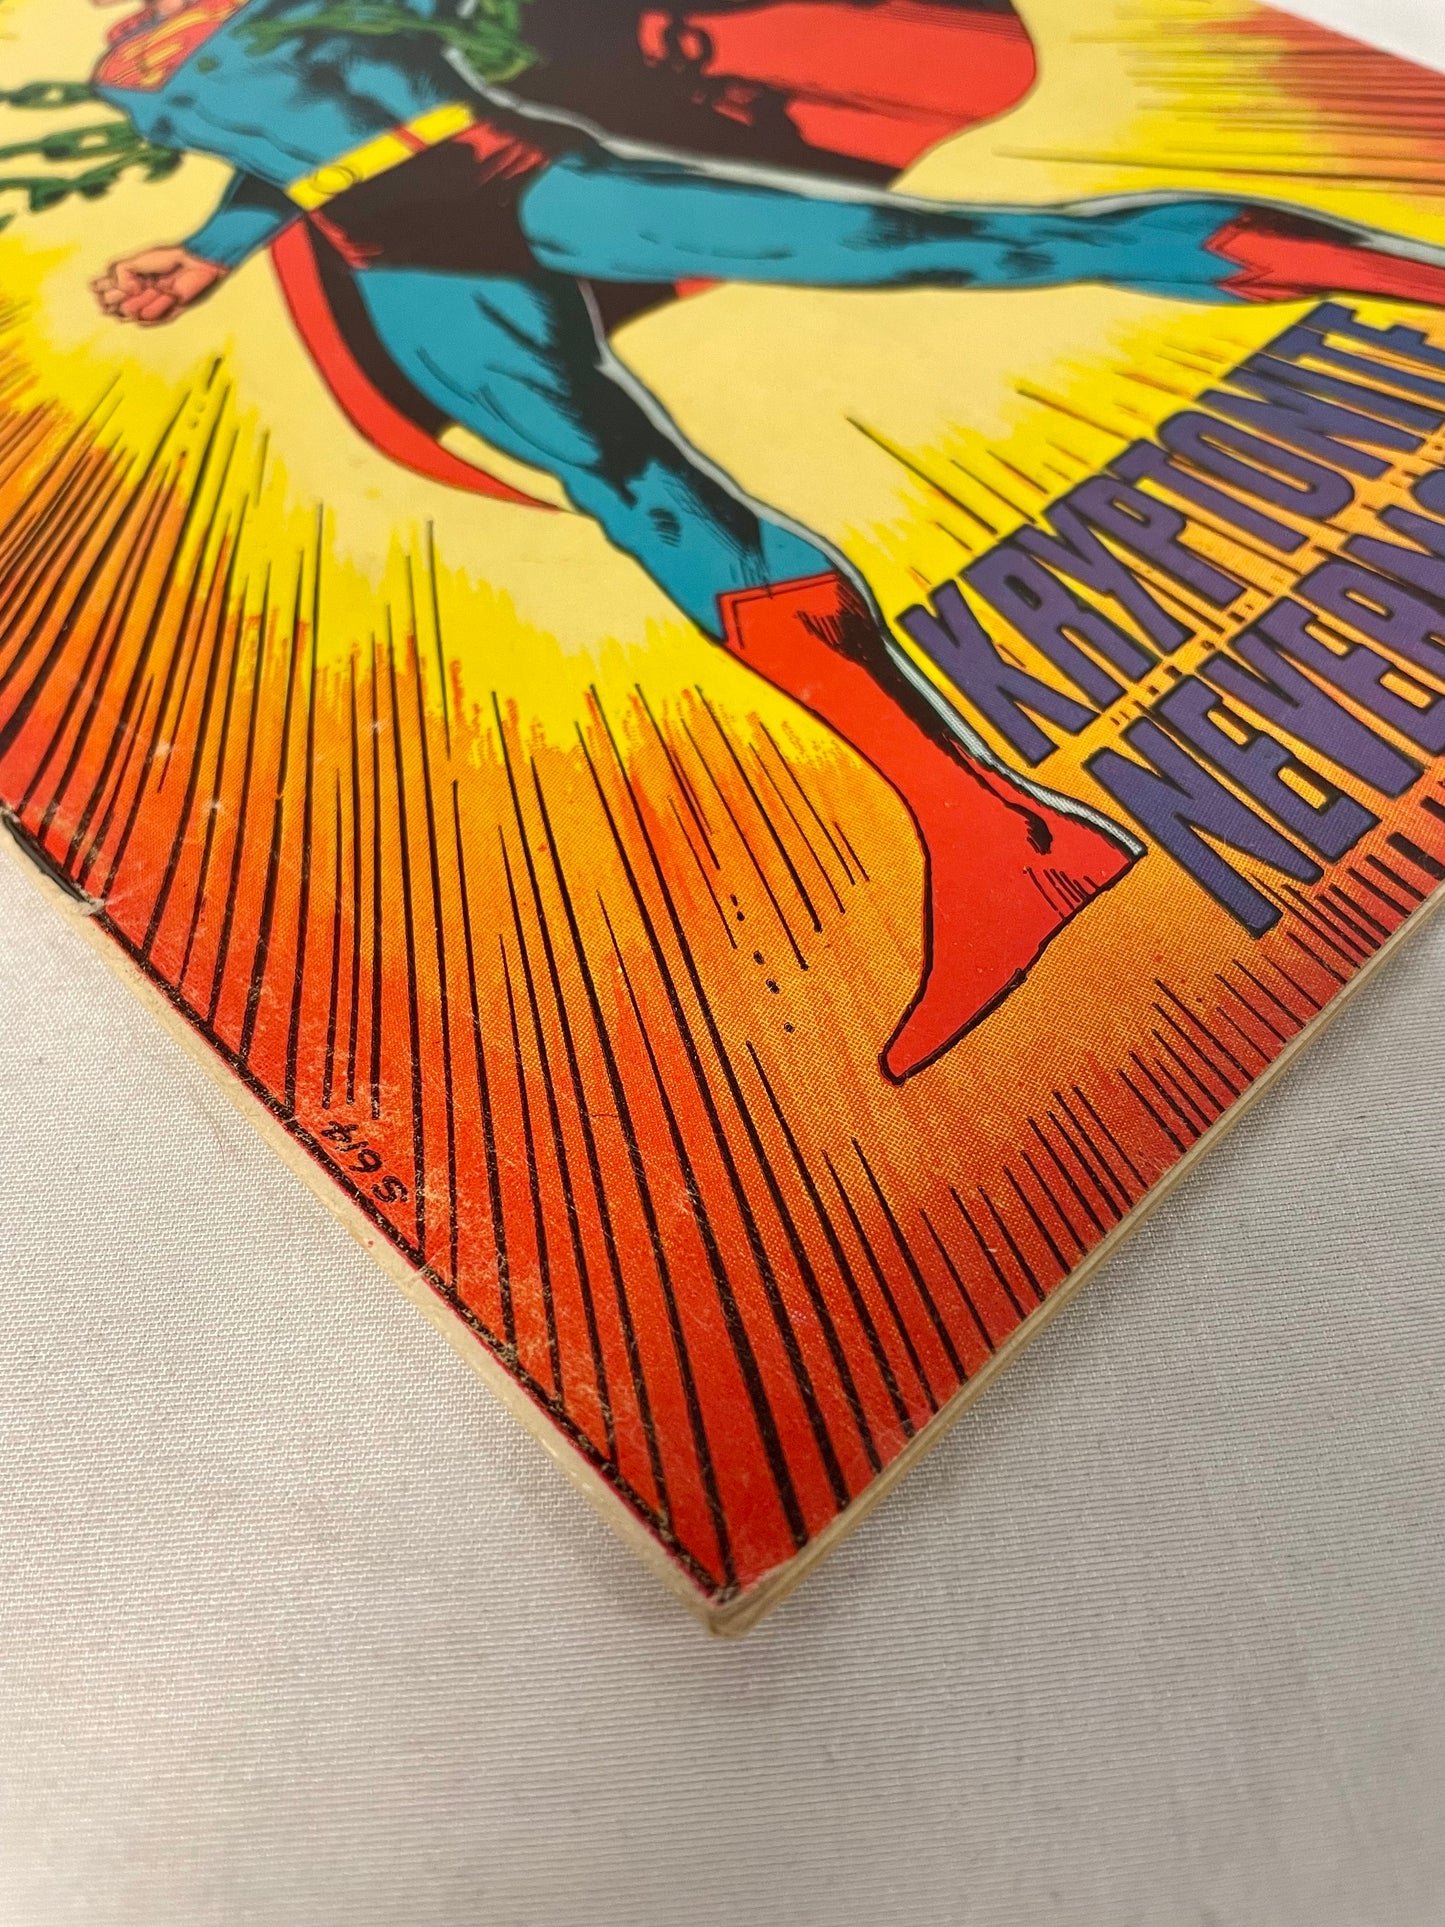 DC Comics The Amazing New Adventures of Superman No.1